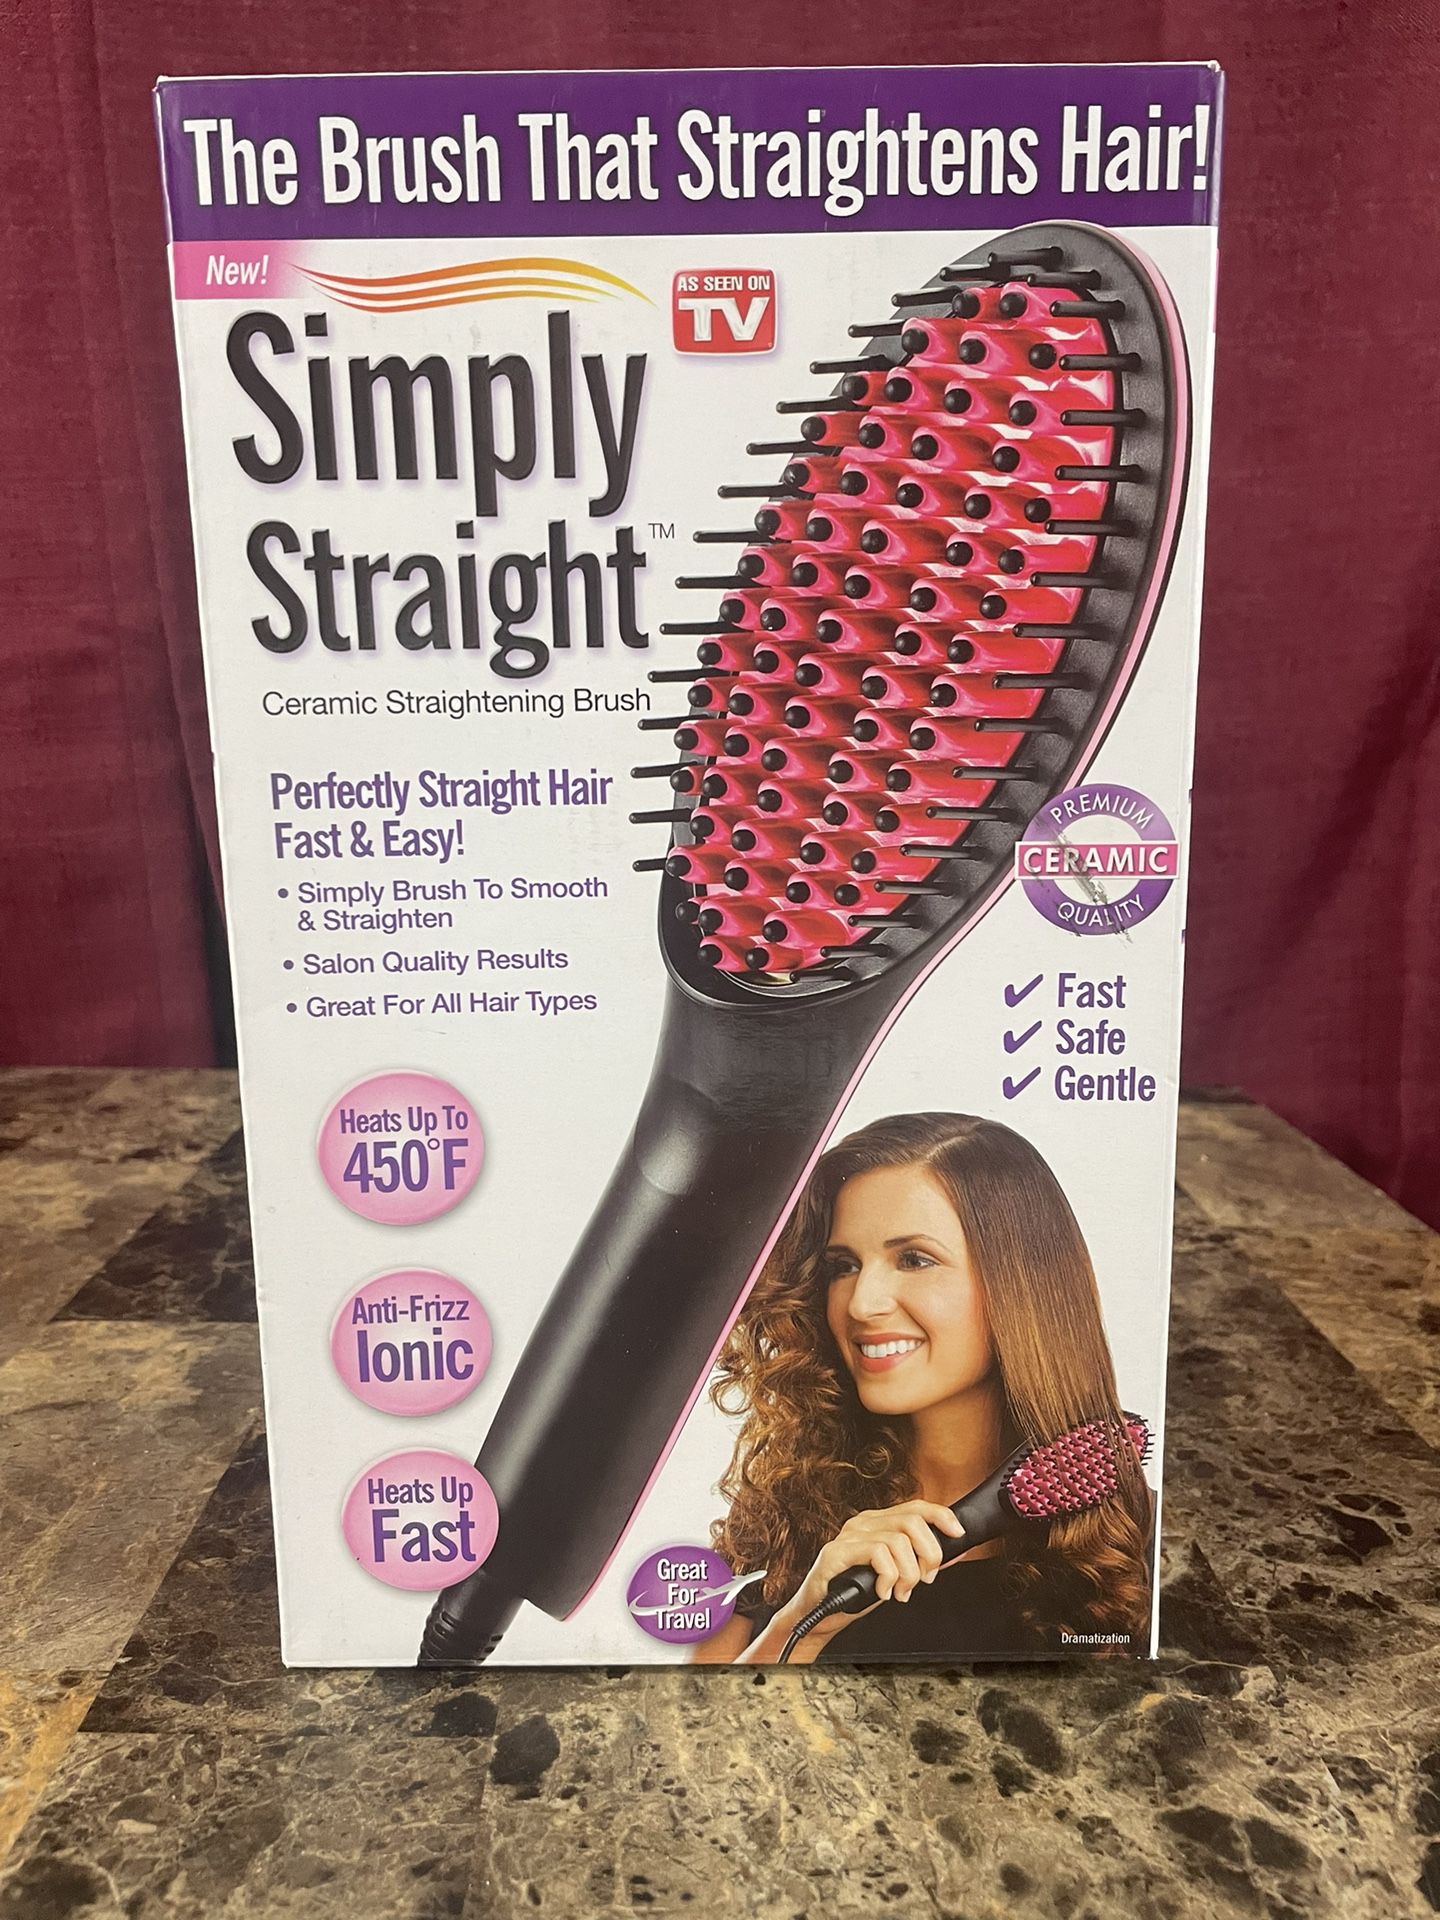 Simply Straight Ceramic Hair Straightening Brush, As Seen On TV